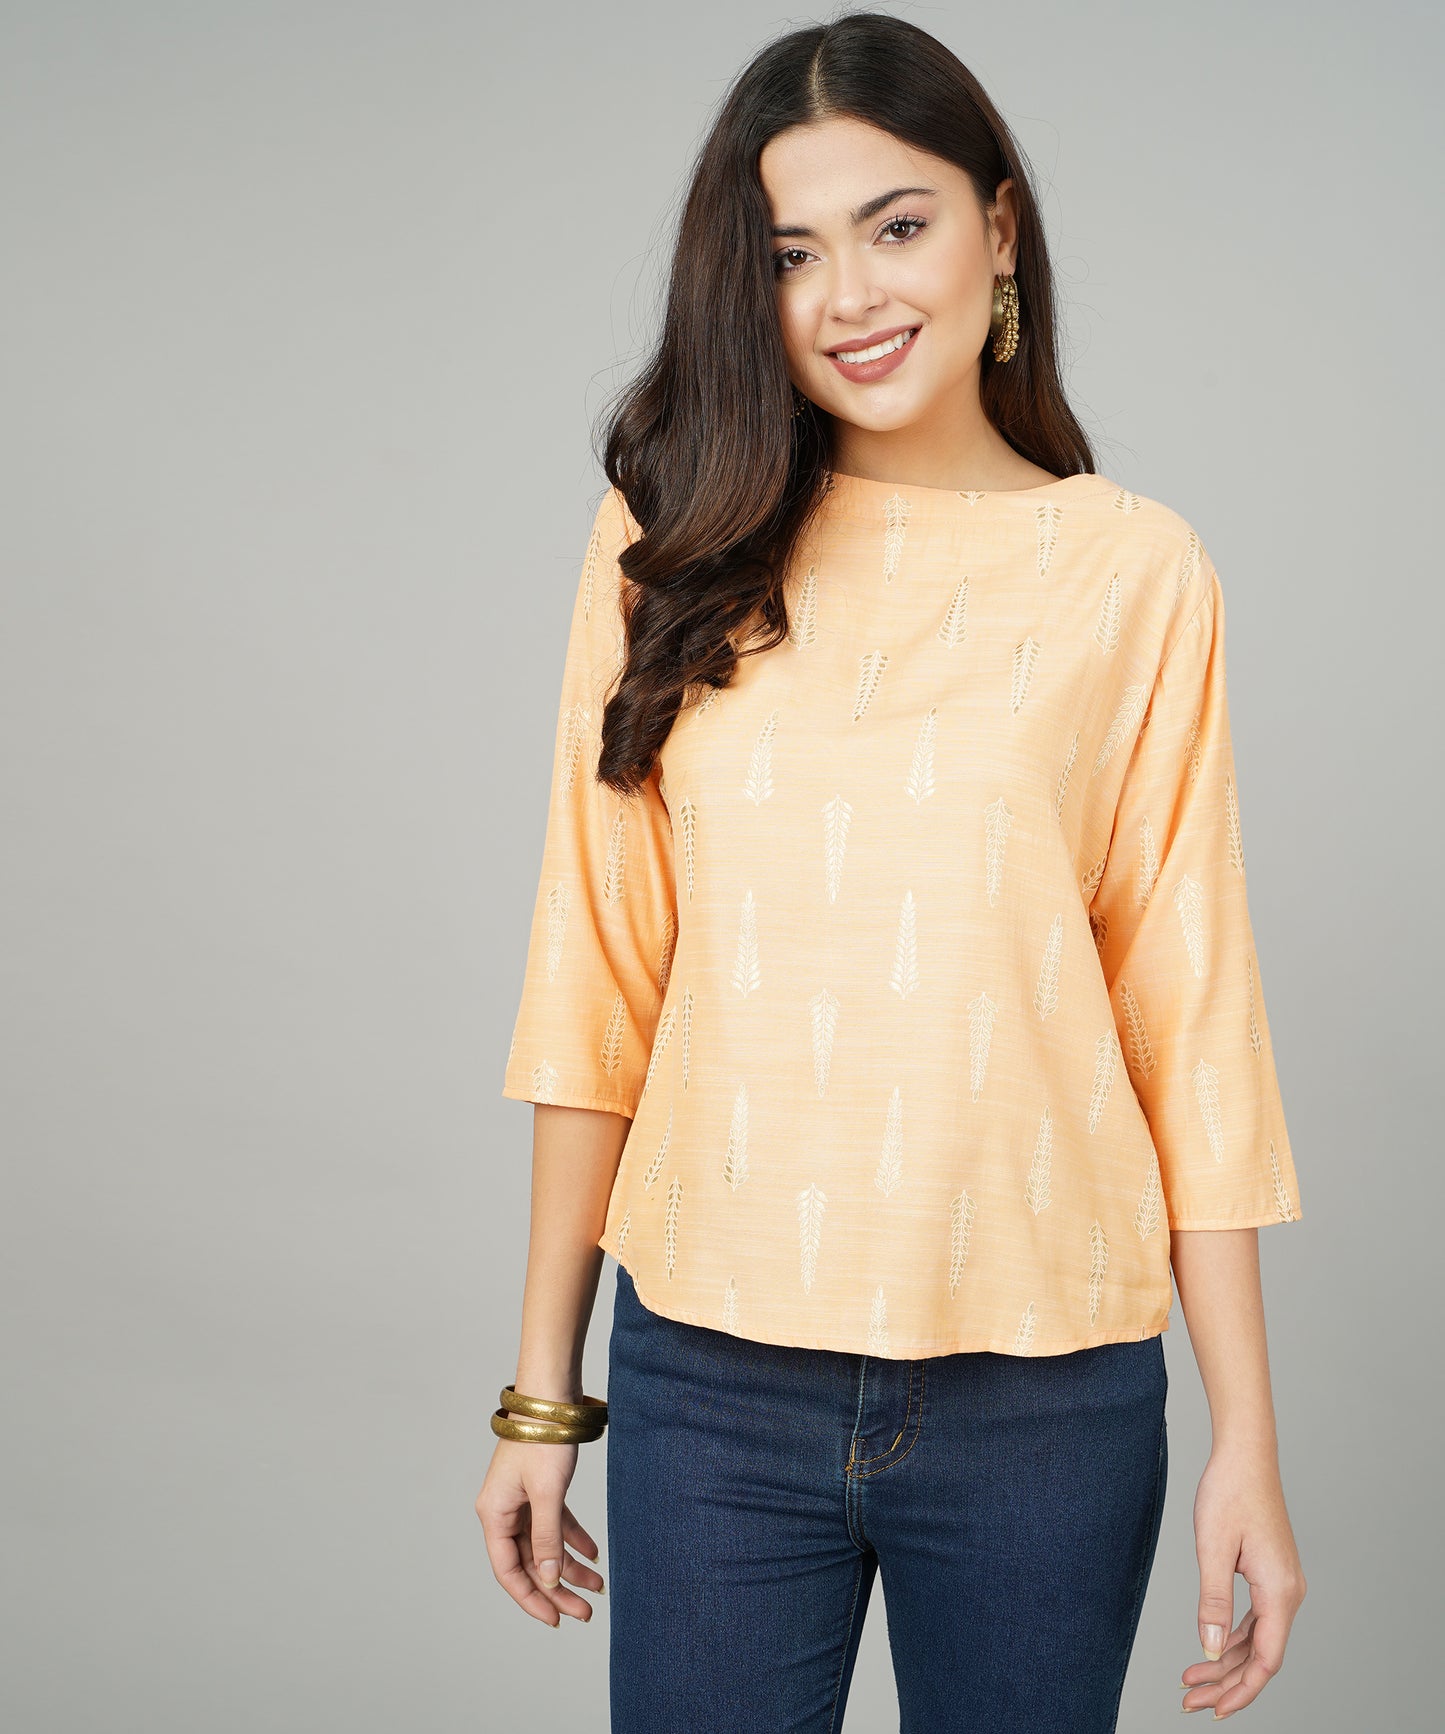 Anushil Foil Printed Orange Cotton Kurti/Top for Women/Girls - Stylish and Comfortable